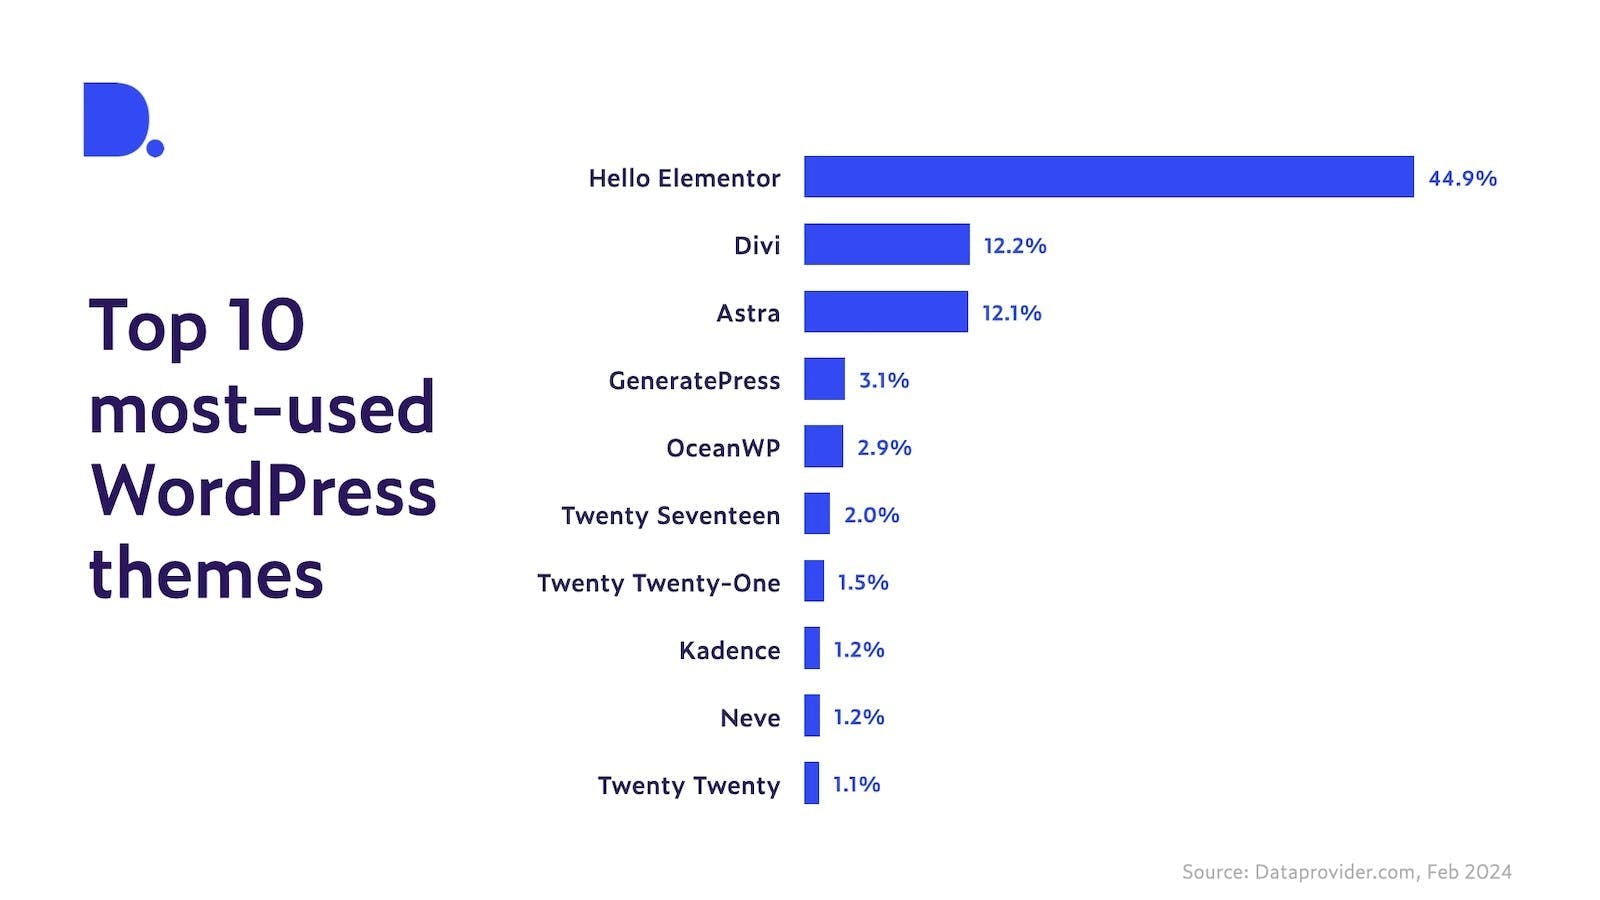 The top ten of most-used WordPress themes. The top ten goes as follows: 1. Hello Elementor 44.9% / 2. Divi 12.2% / 3. Astra 12.1% / 4. GeneratePress 3.1% / 5. OceanWP 2.9% / 6. Twenty Seventeen 2.0% / 7. Twenty Twenty-One 1.5% / 8. Kadence 1.2% / 9. Neve 1.2% / 10. Twenty Twenty 1.1%